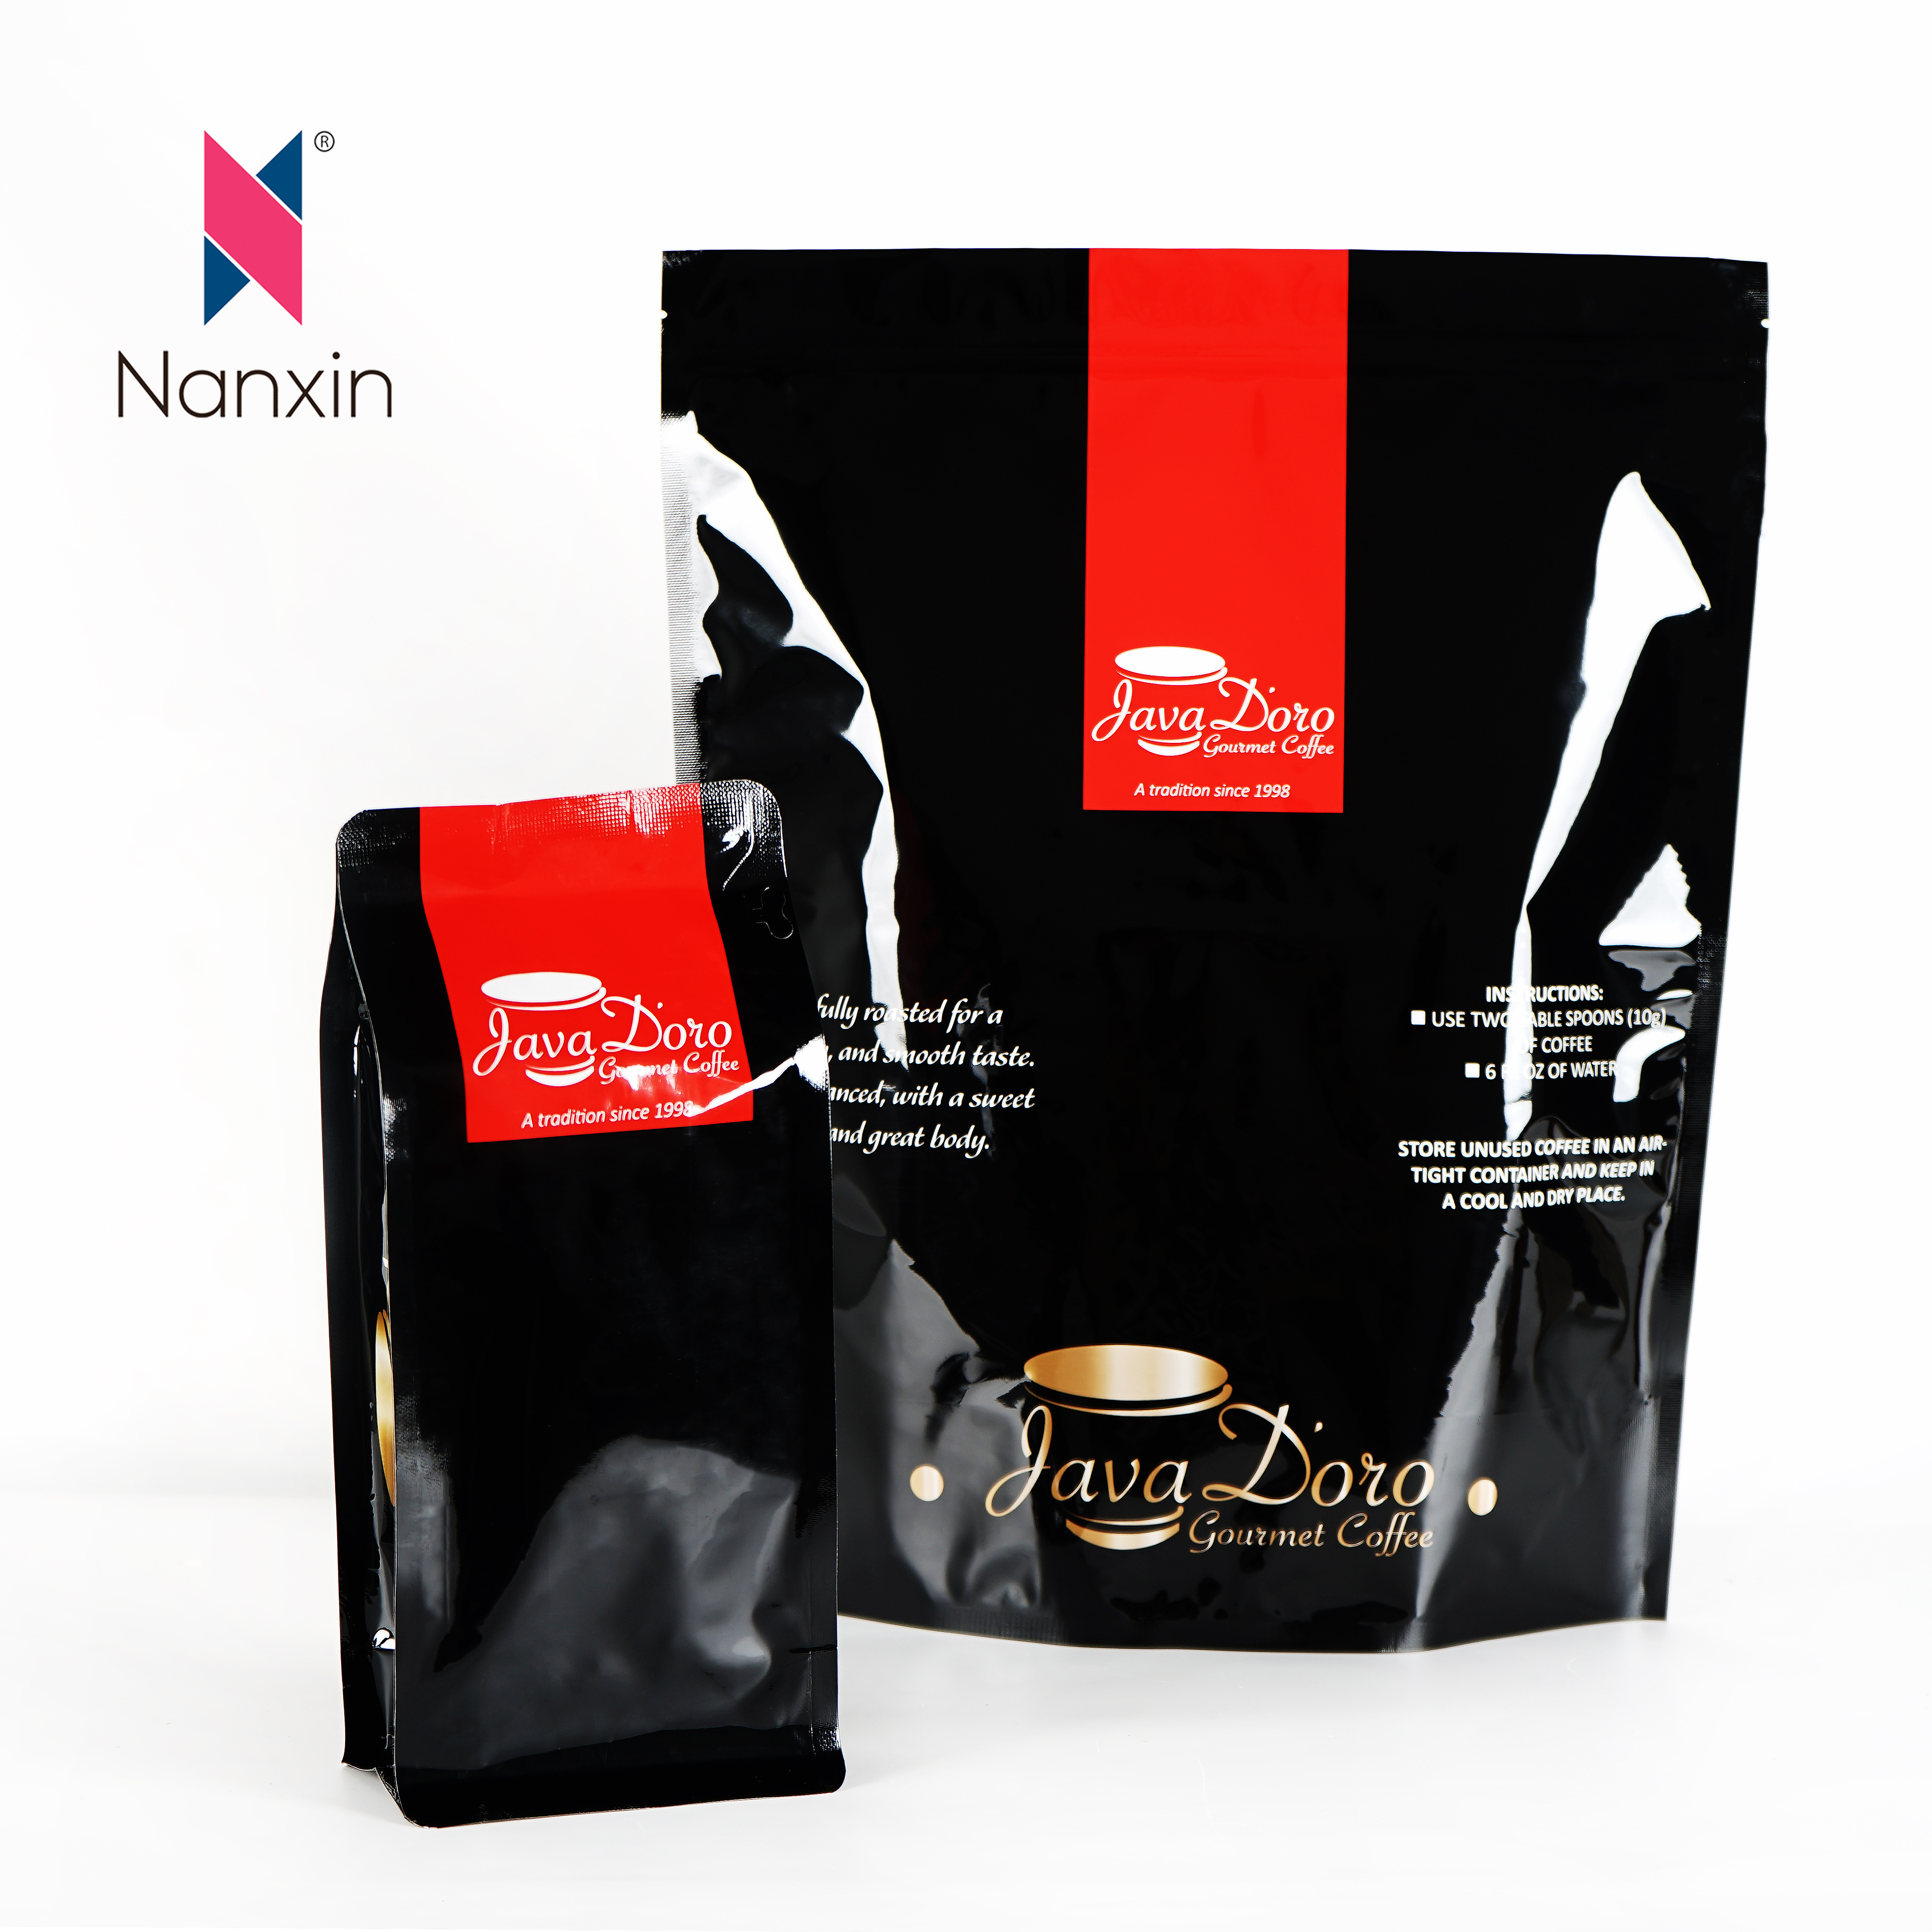 Resealable Self Standing Flat Bottom Coffee Bean Bag / Coffee Bean Packaging Bag With Valve And Zipper 250g 500g 1000g